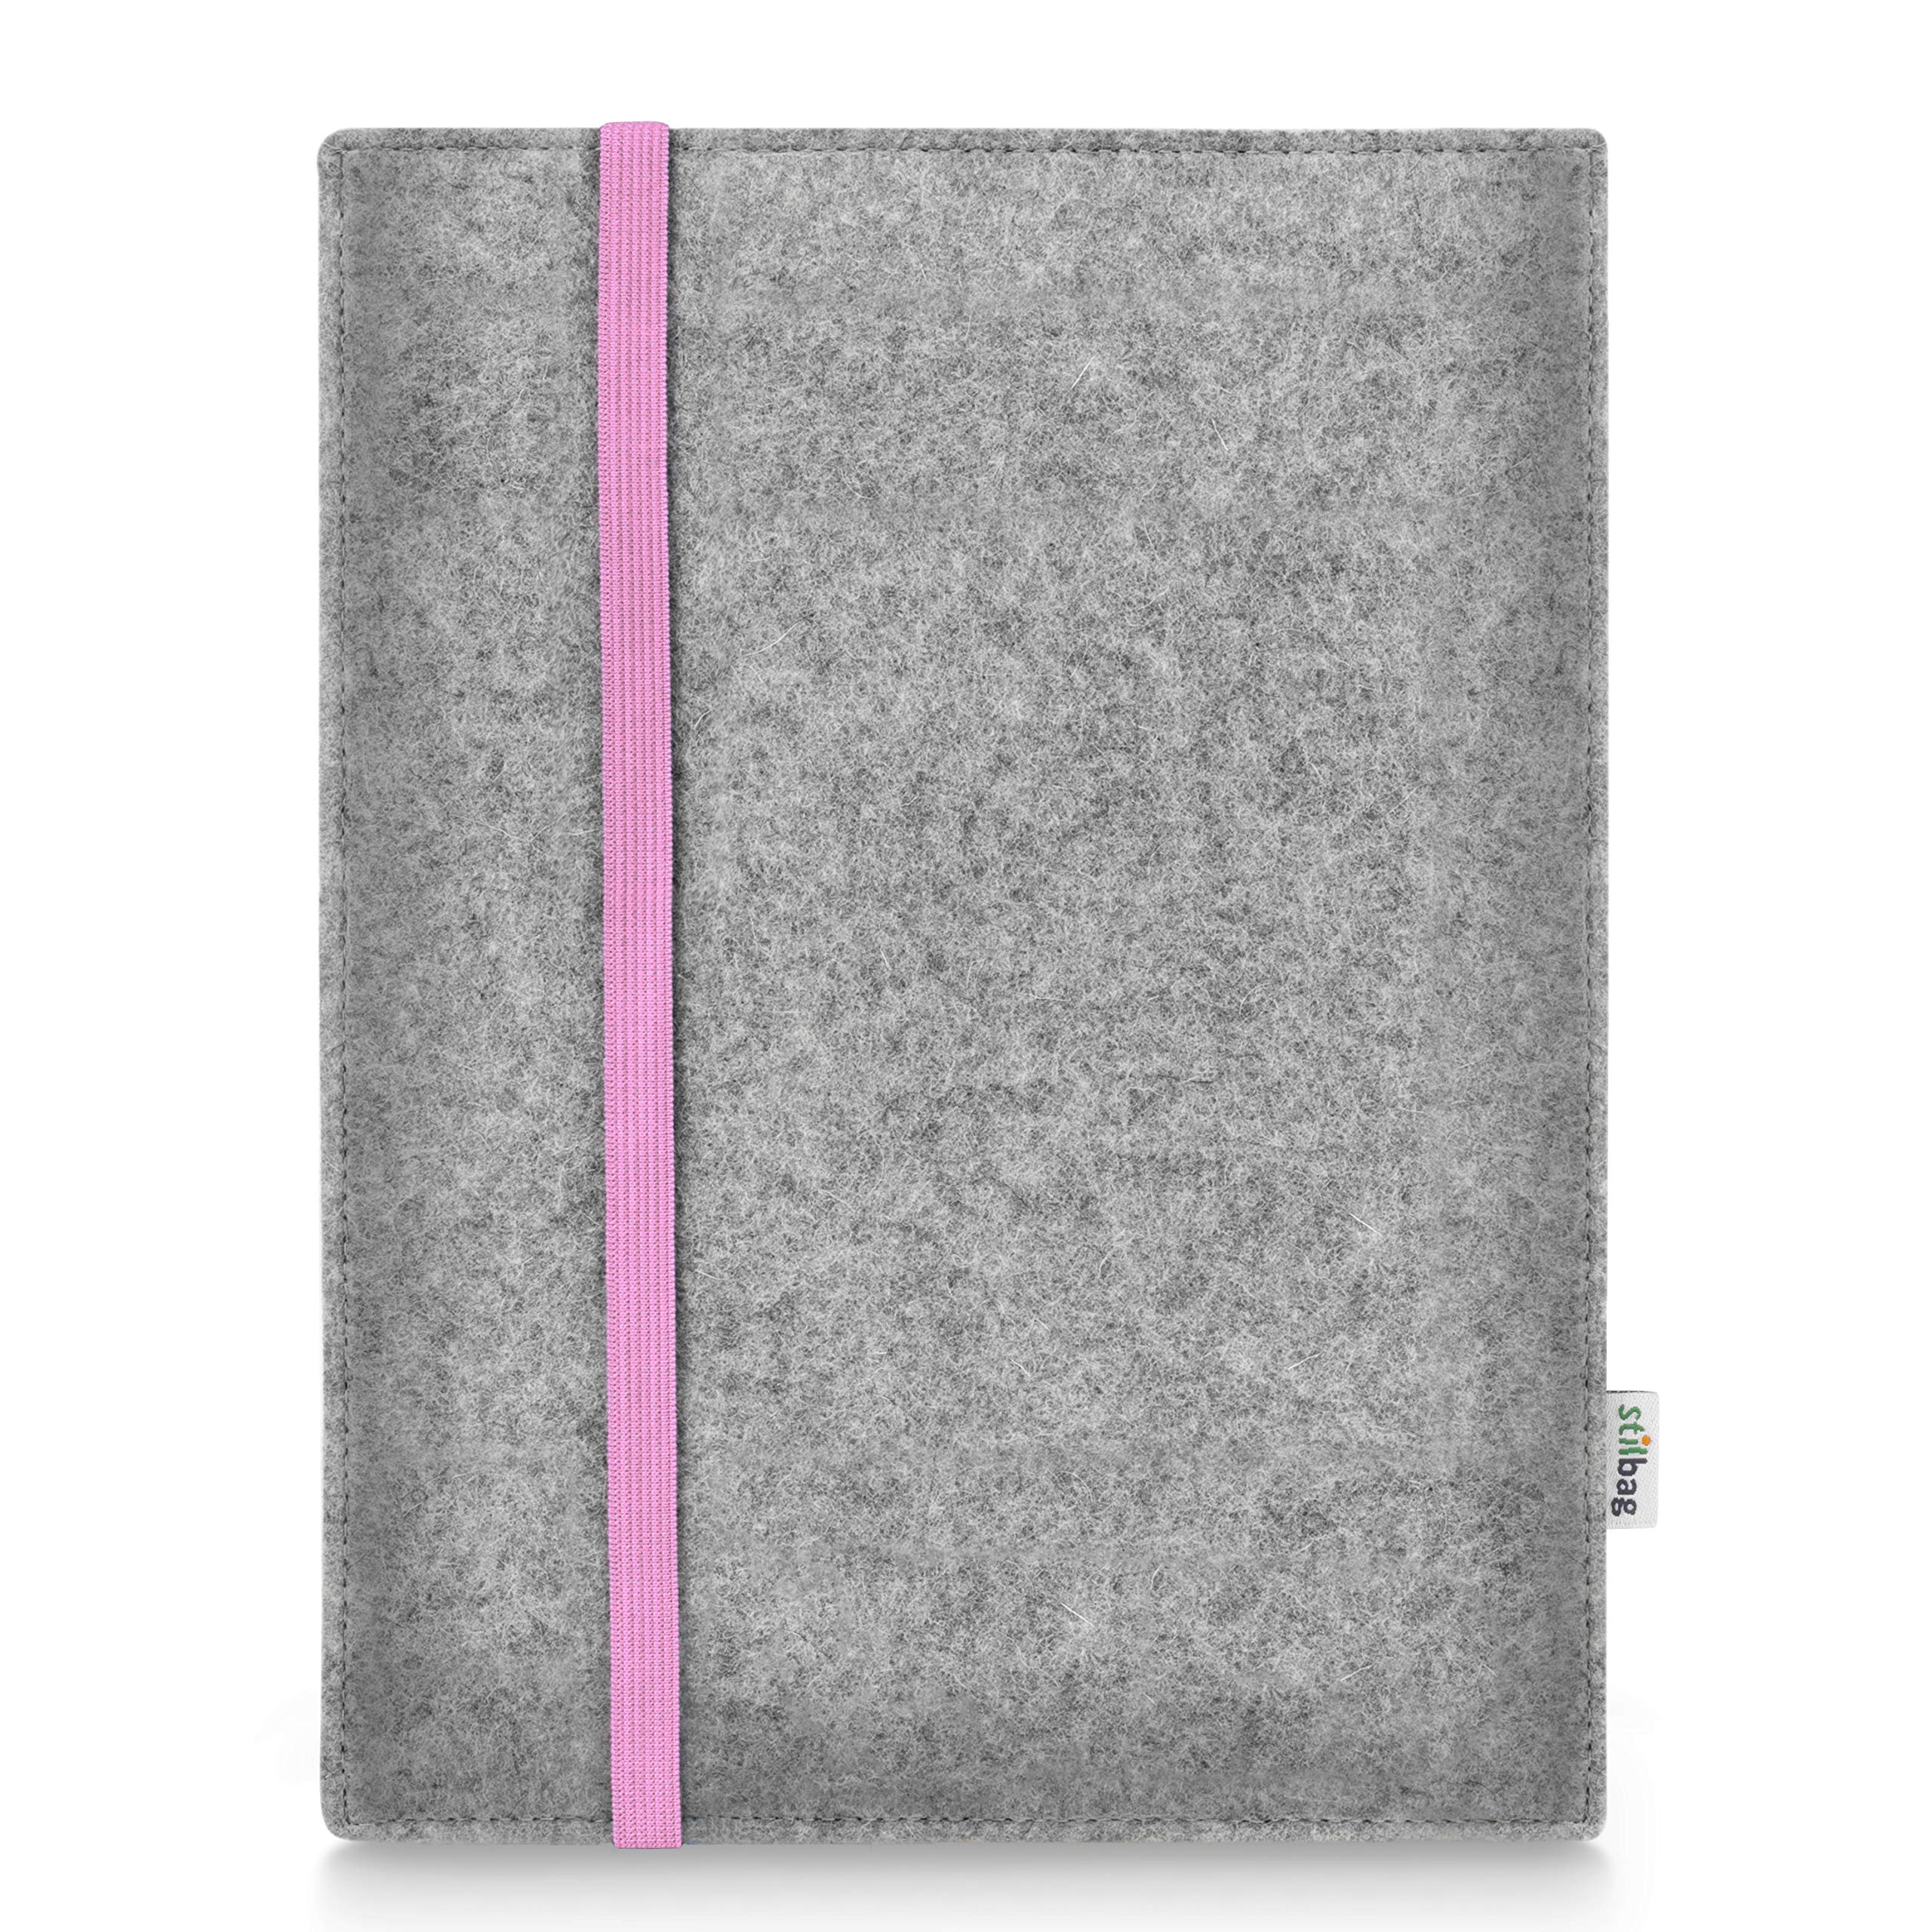 Stilbag Hülle für Apple iPad Pro 10.5 | Etui Case aus Merino Wollfilz | Modell Leon in hellgrau/rosa | Tablet Schutz-Hülle Made in Germany